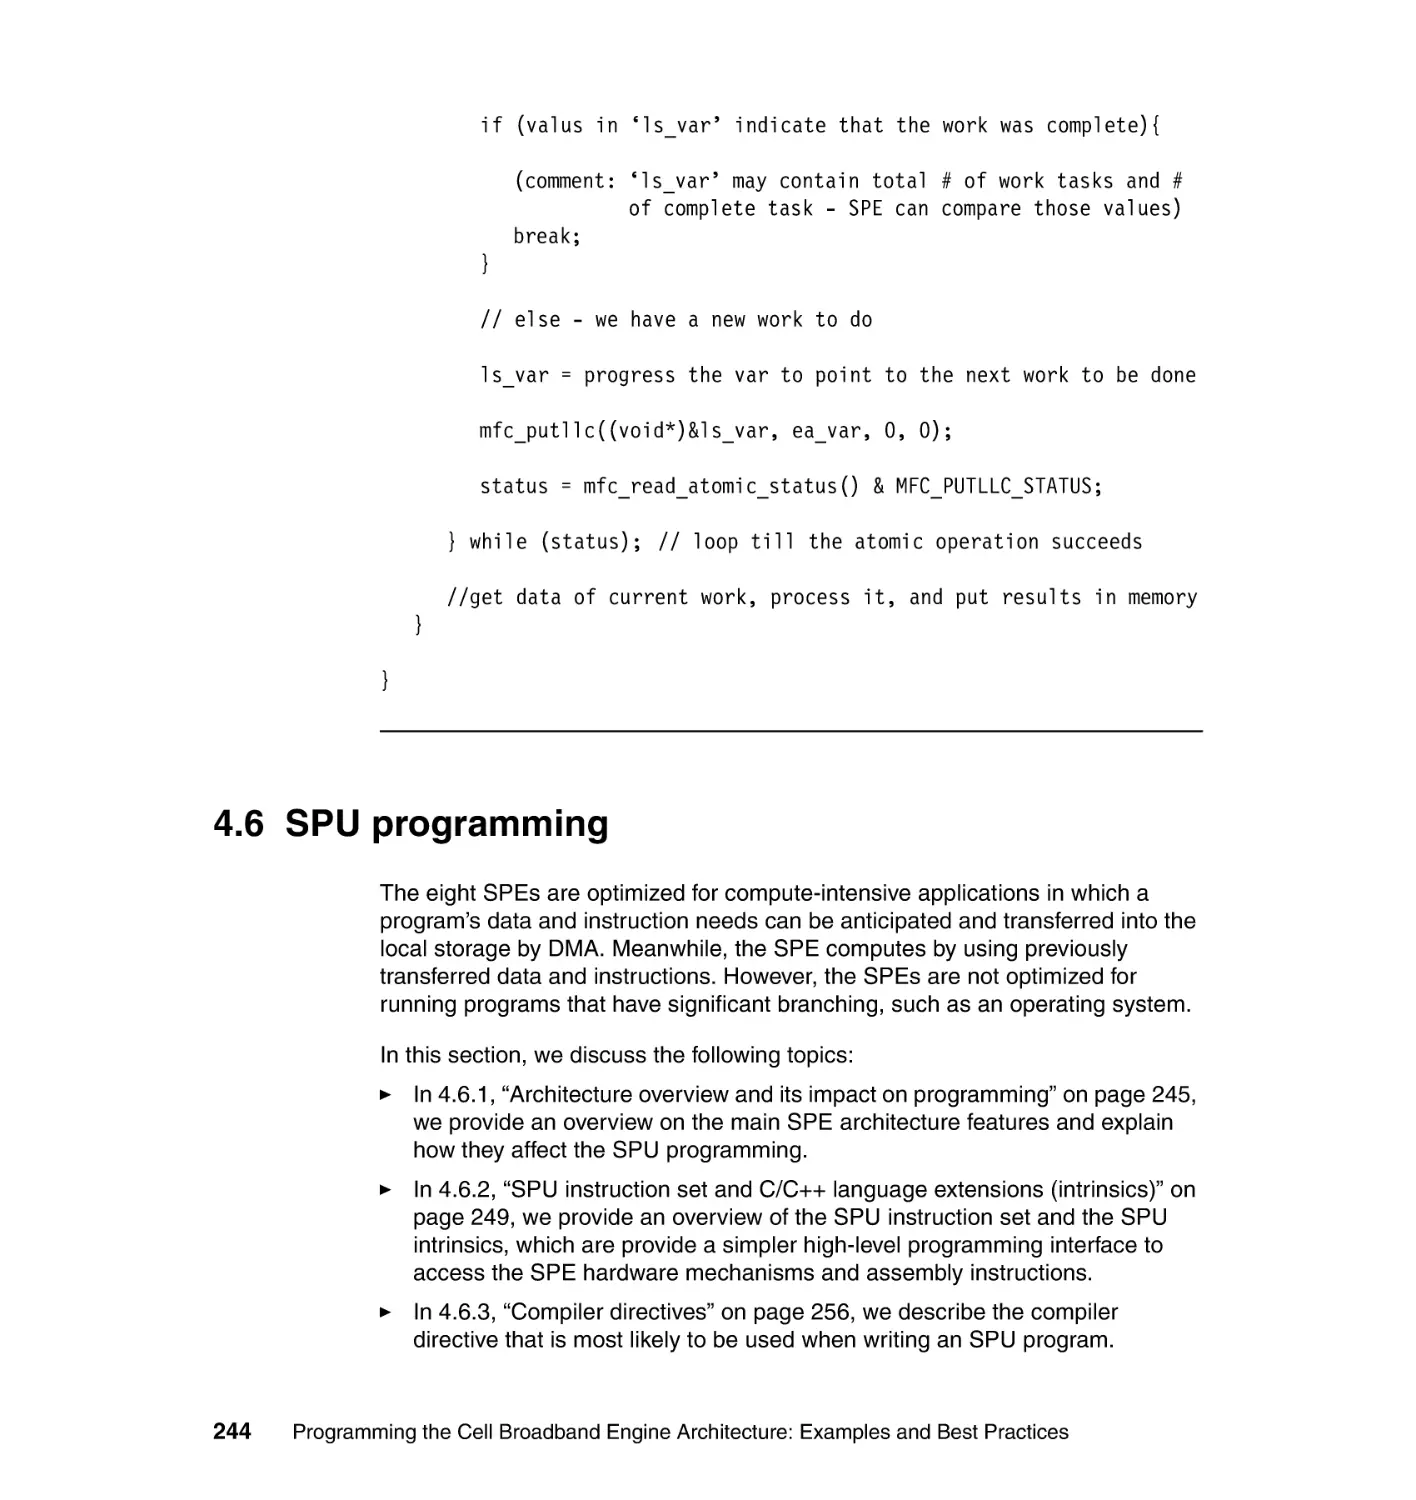 4.6 SPU programming